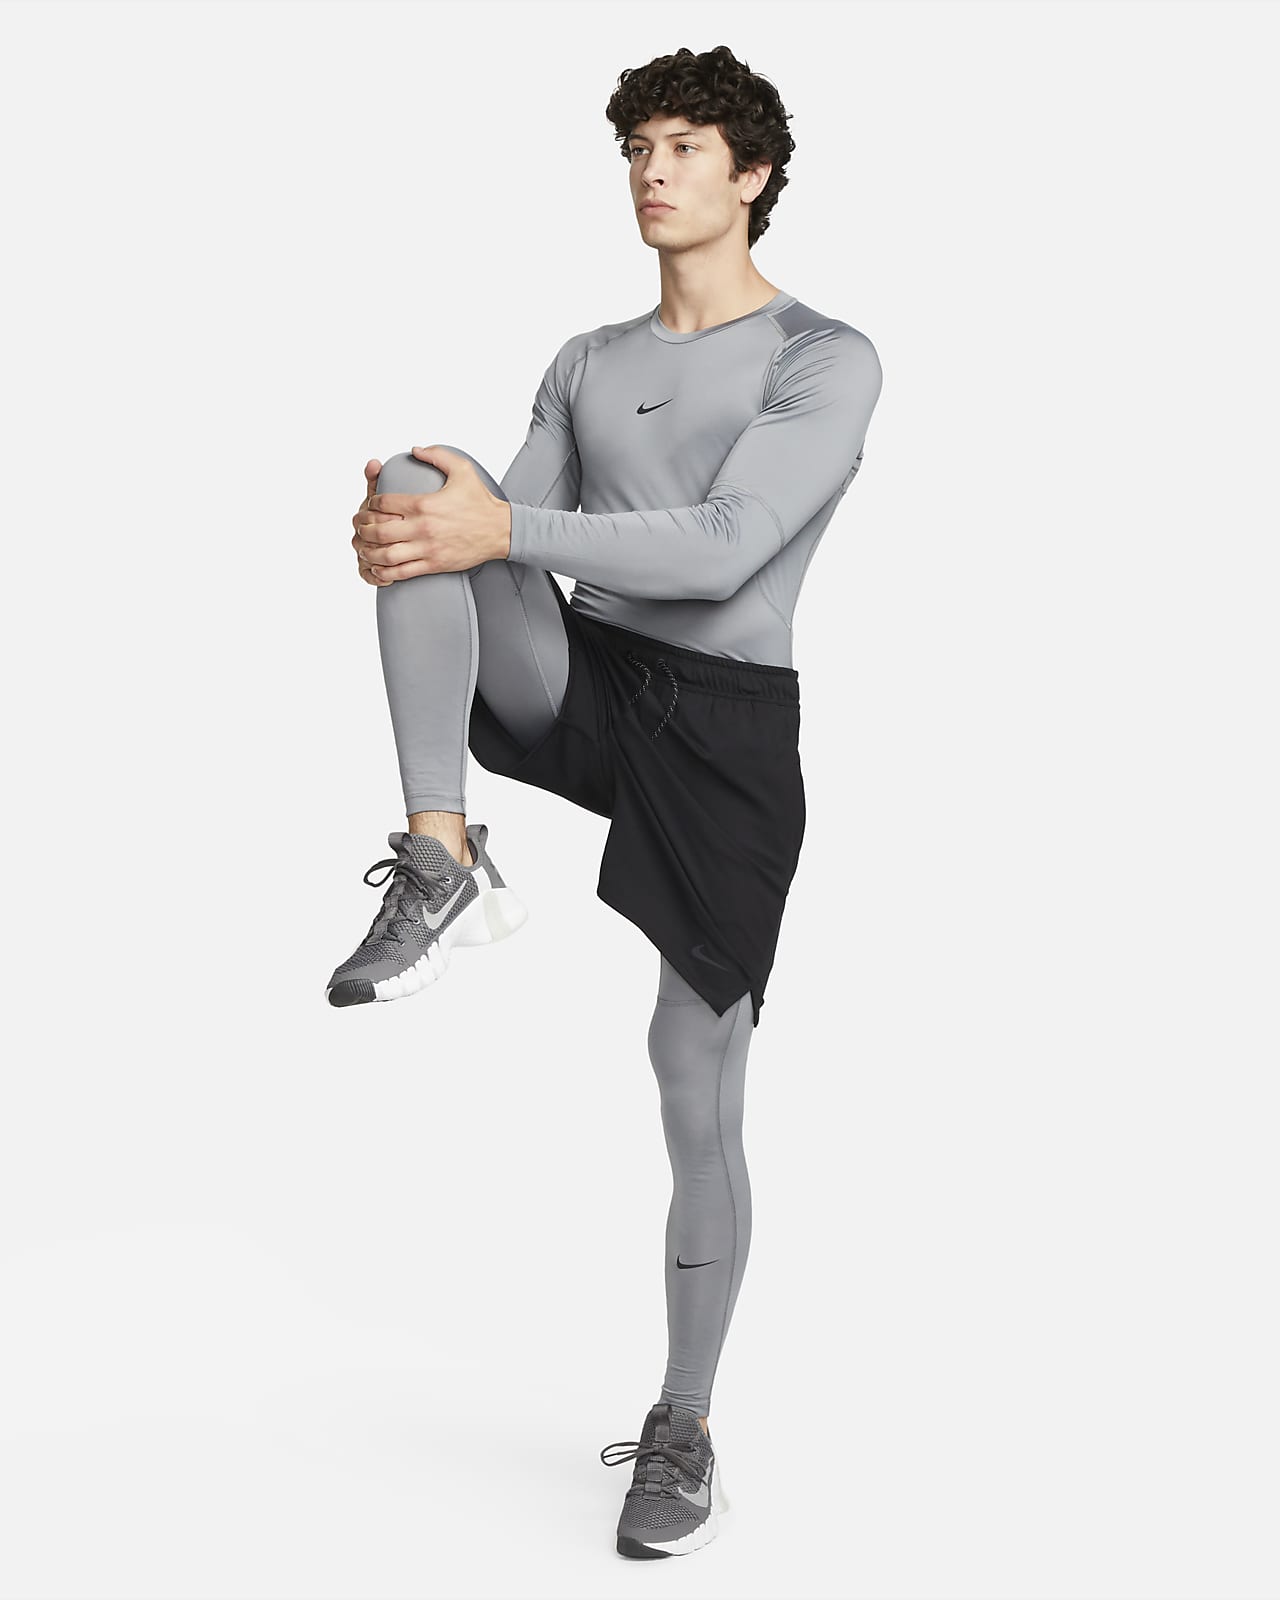 Nike Pro Dri FIT Mens Training Gym Tight-Fit Sleeveless Shirt Grey